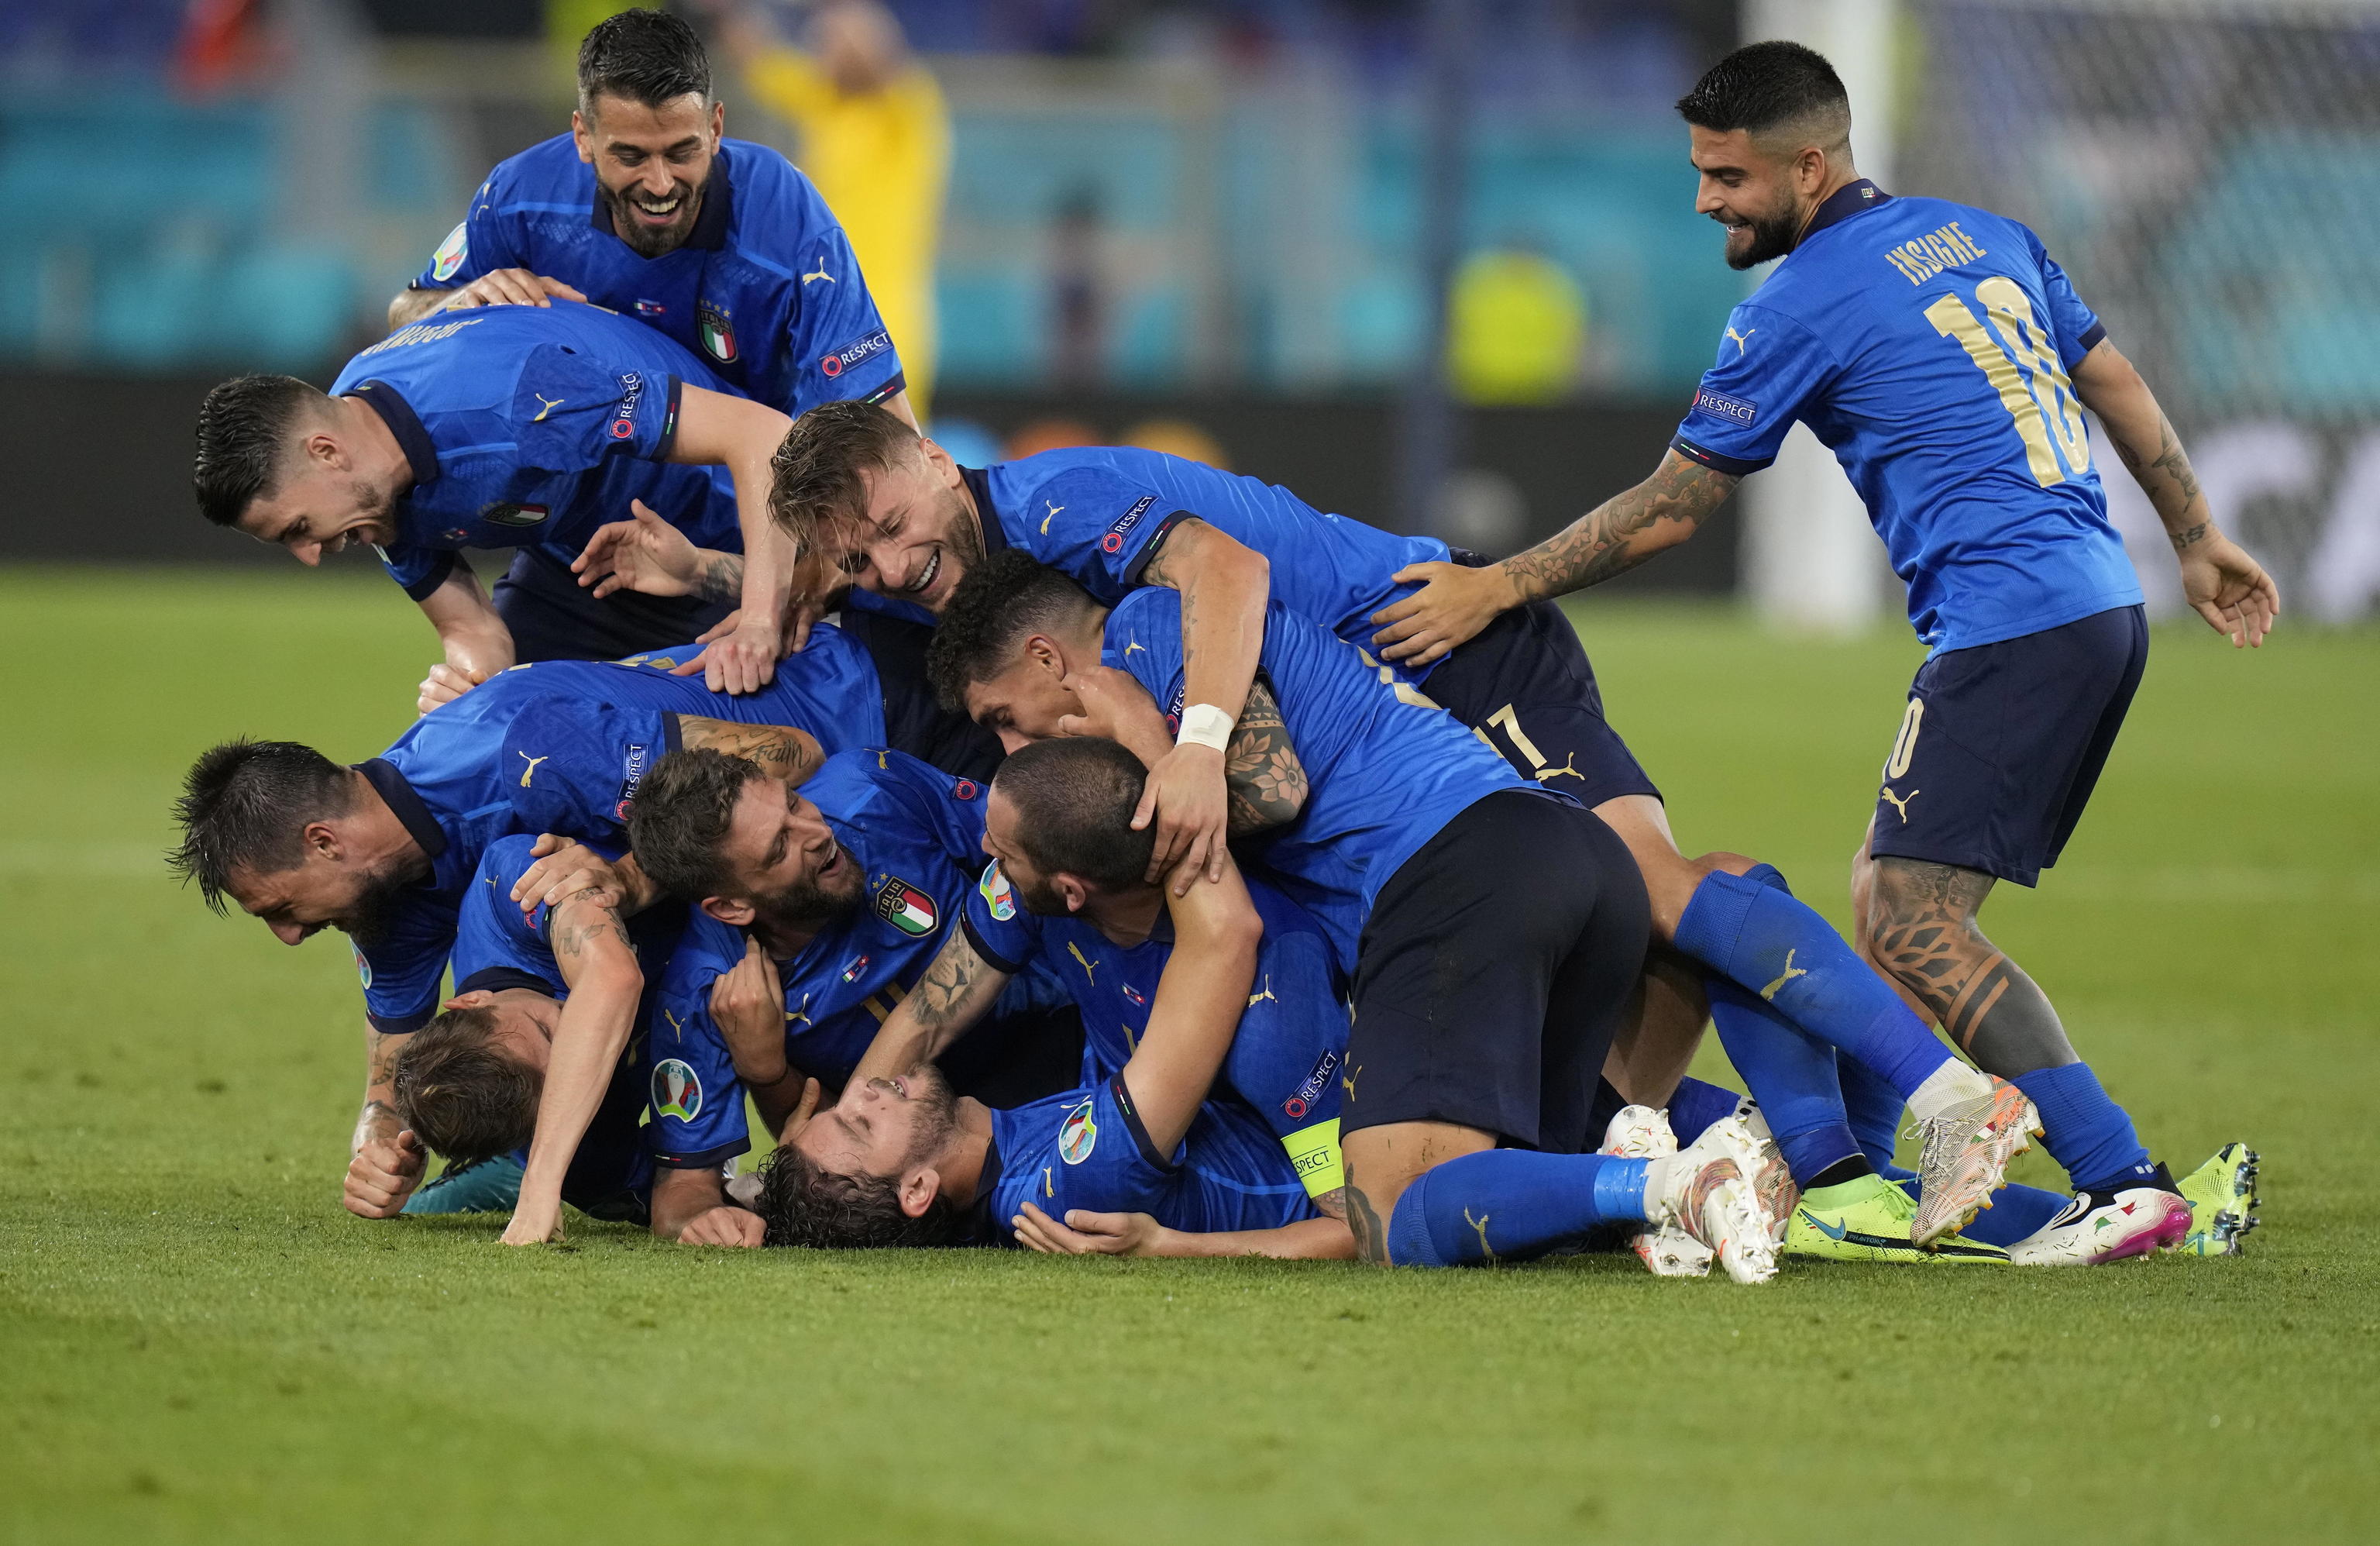 La seleccin italiana celebrando el gol de Locatelli